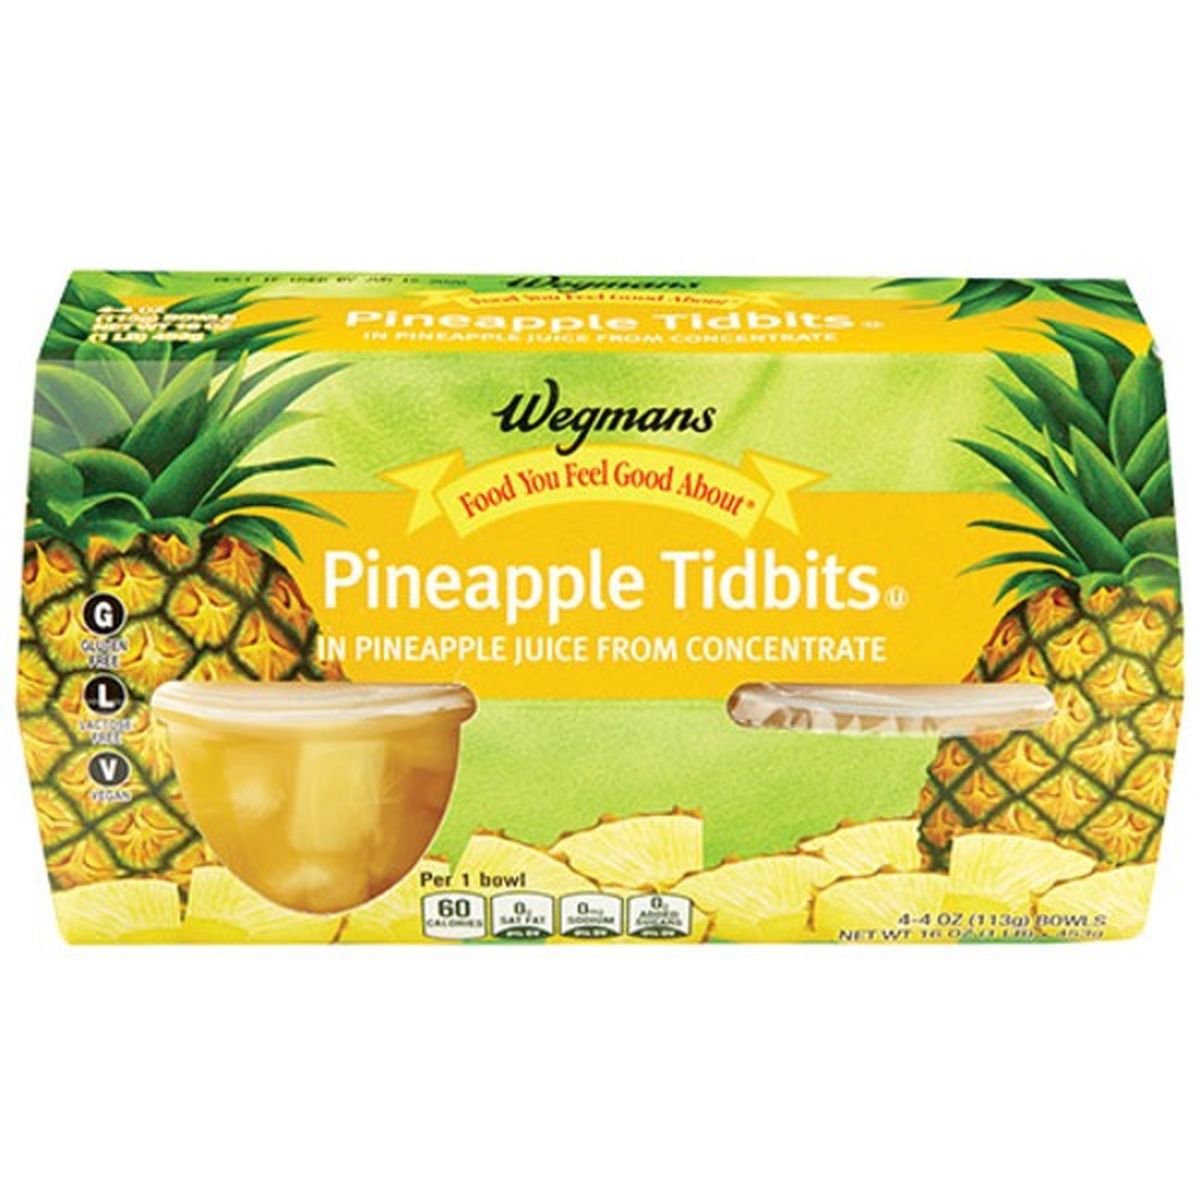 Calories in Wegmans Pineapple Tidbits